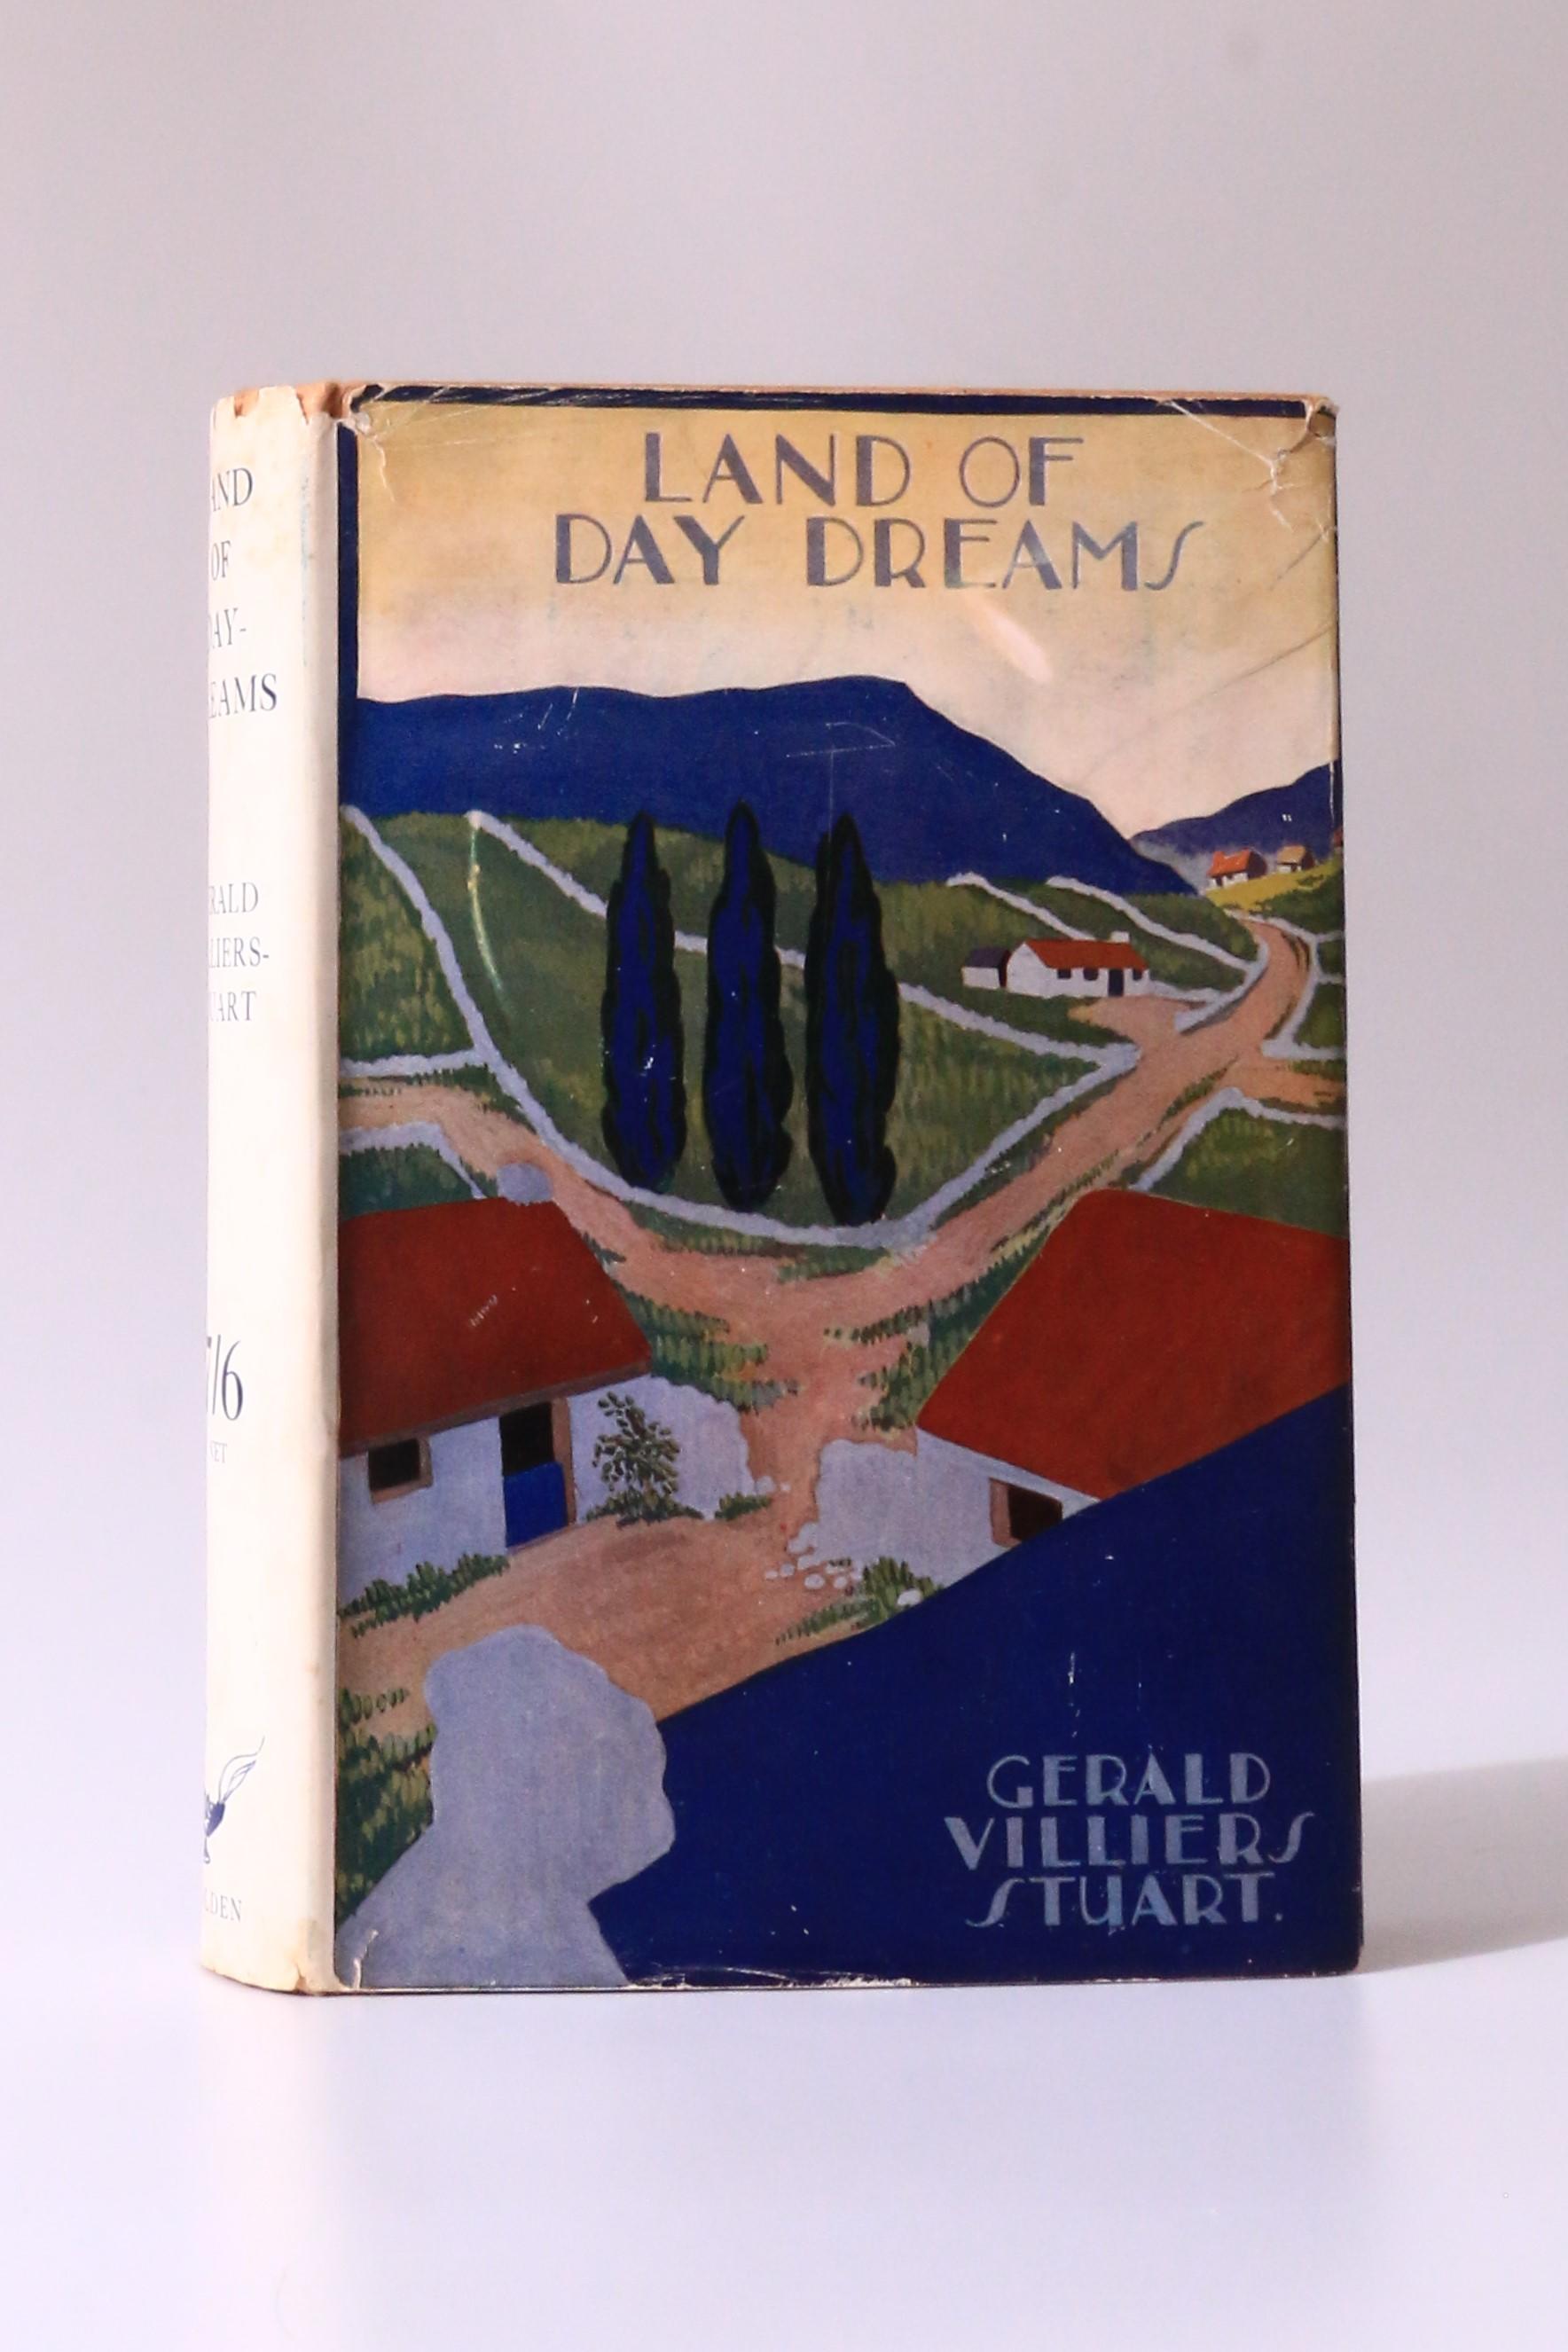 Gerald Villiers Stuart - Land of Day Dreams - Robert Holden, 1926, First Edition.